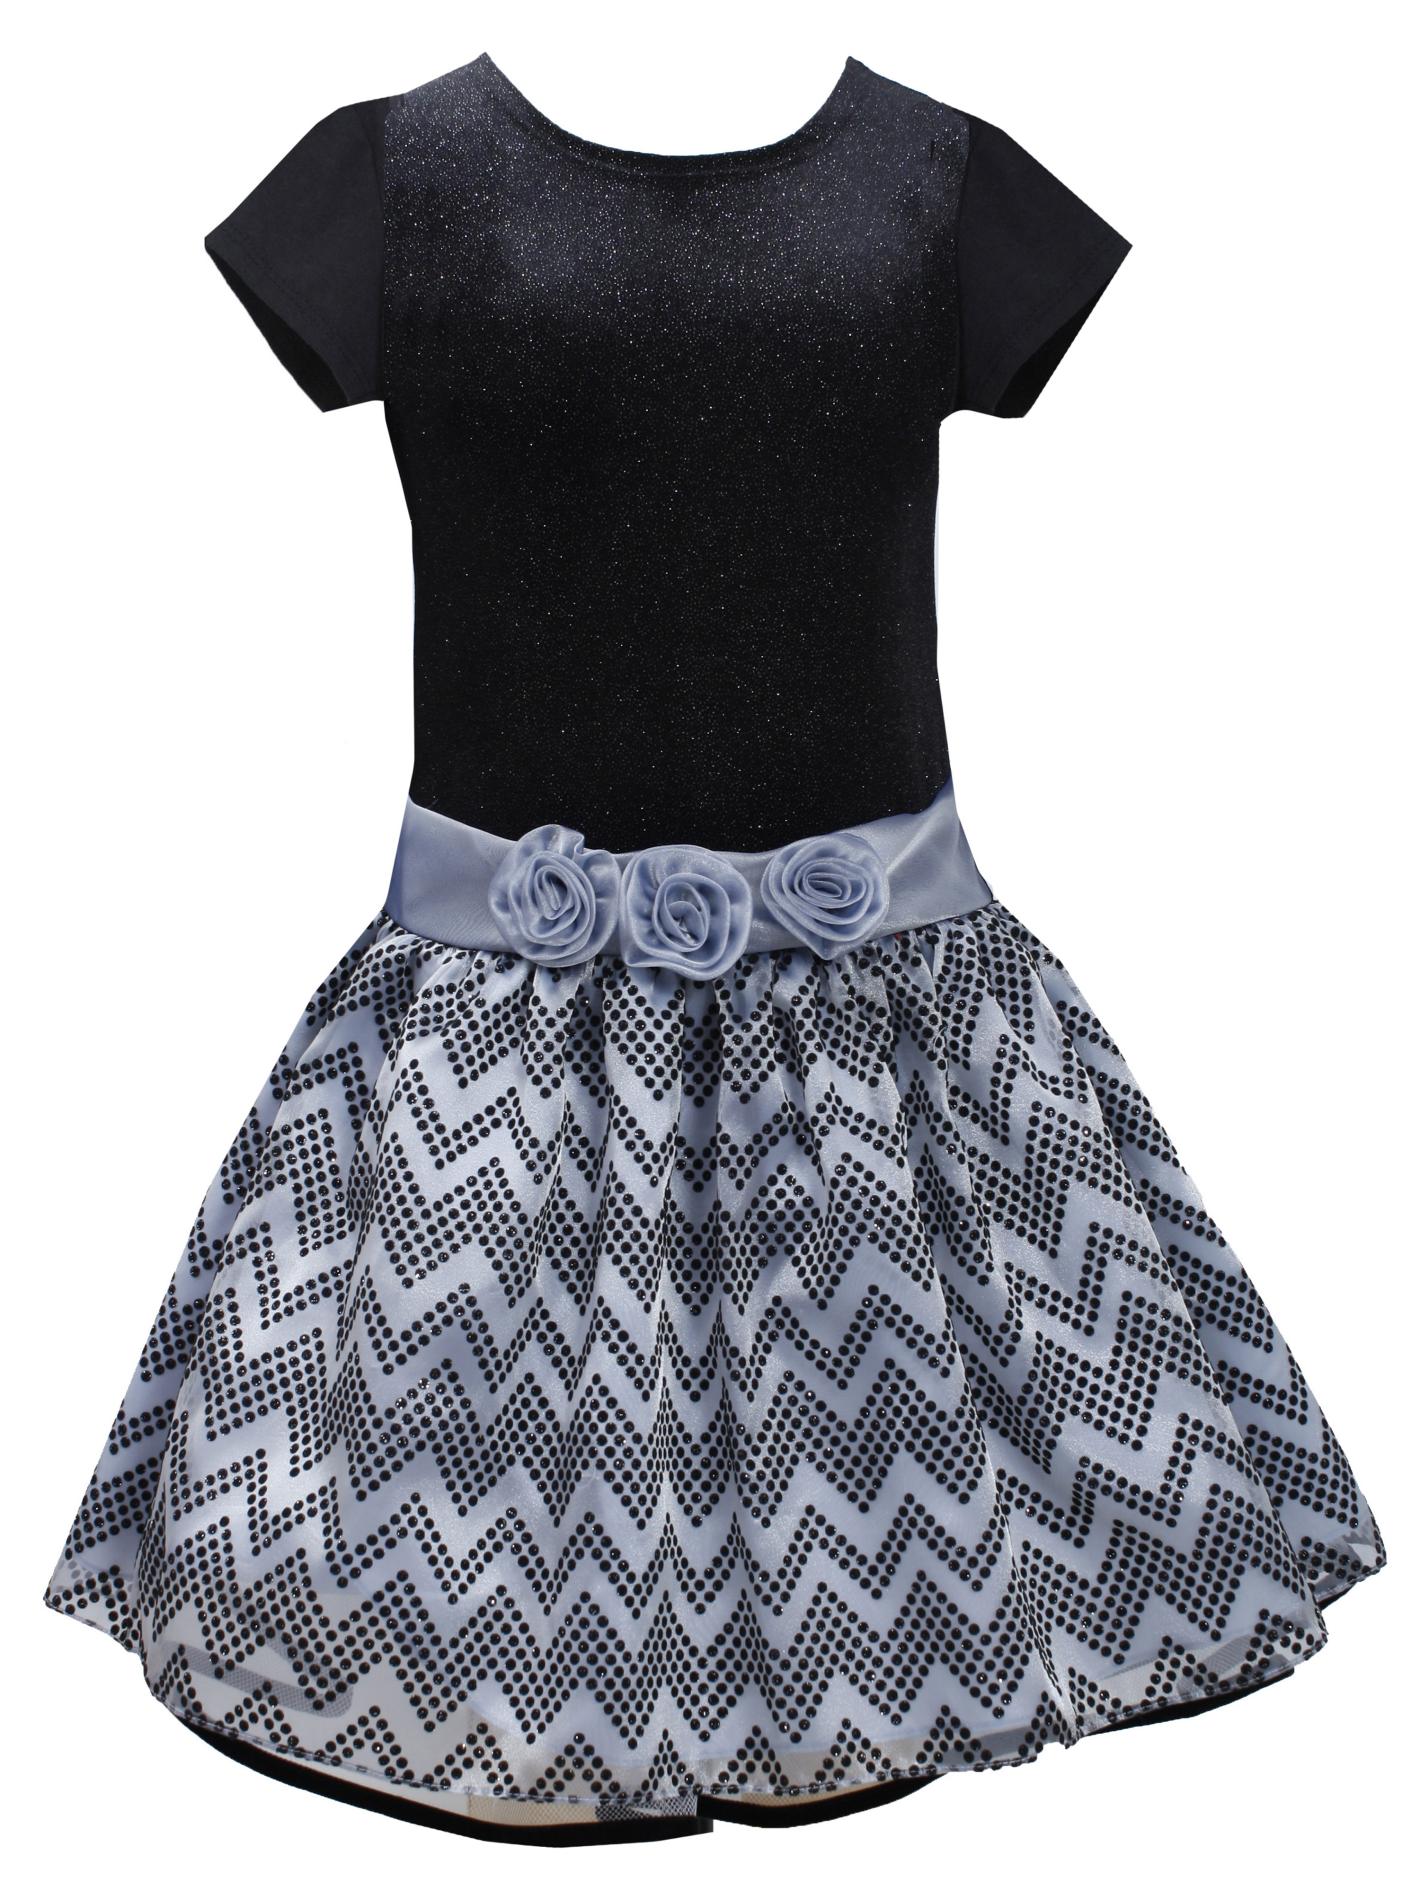 Ashley Ann Girl's Short-Sleeve Party Dress - Chevron Striped